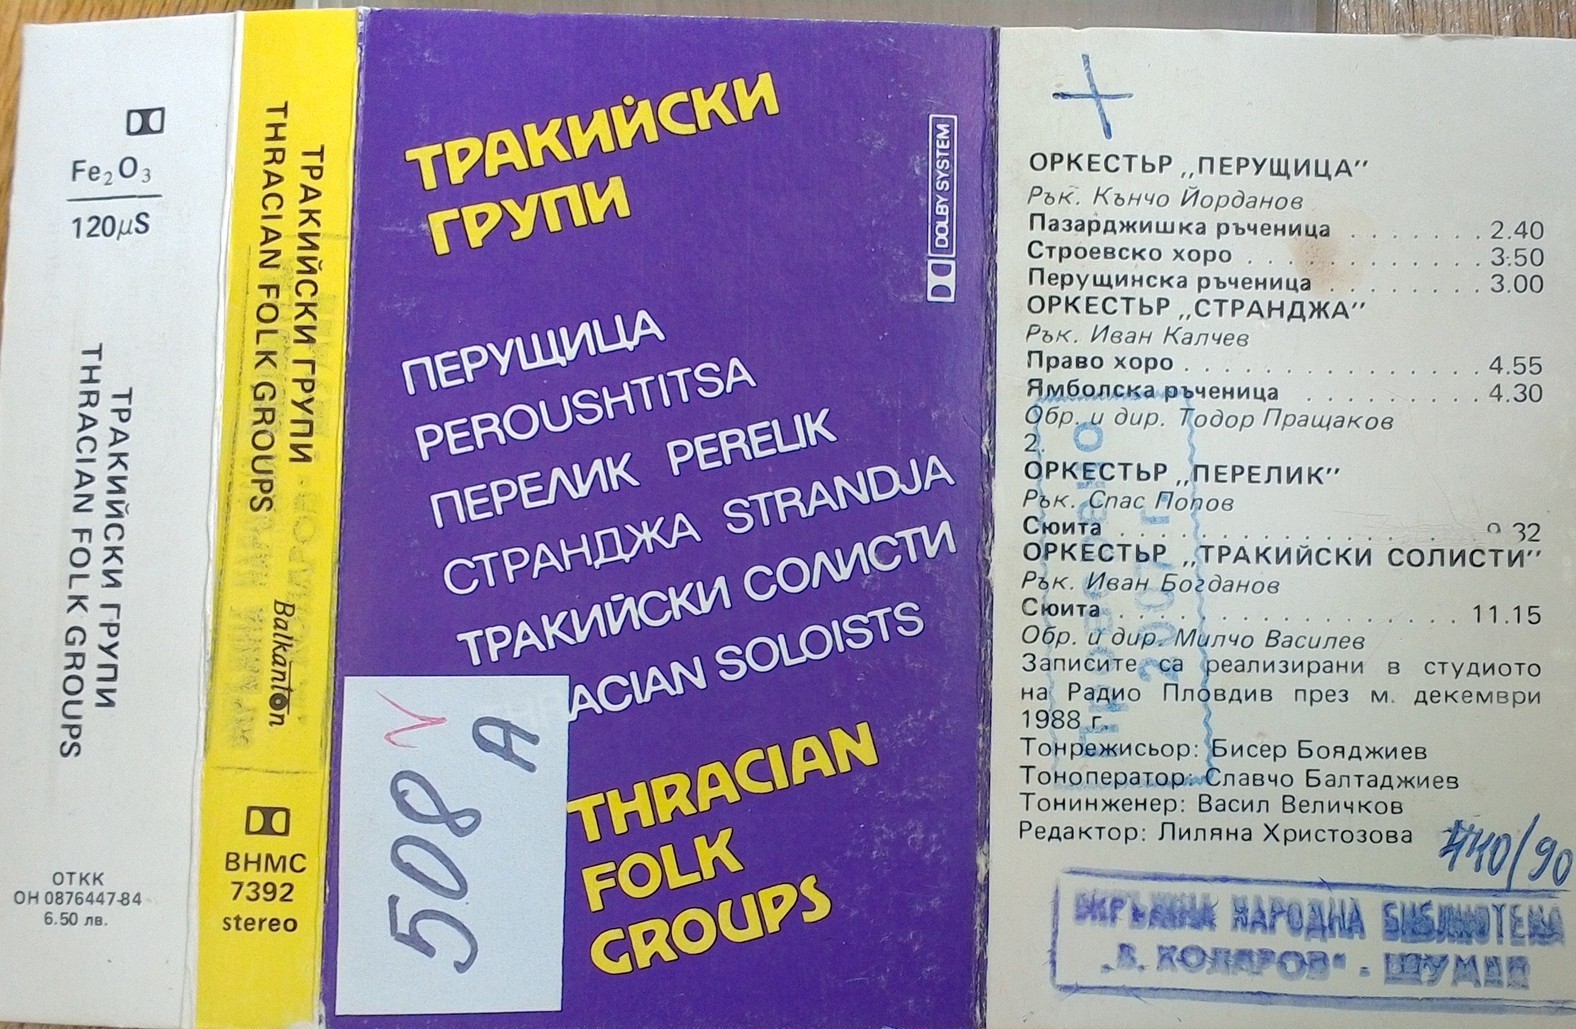 Тракийски групи